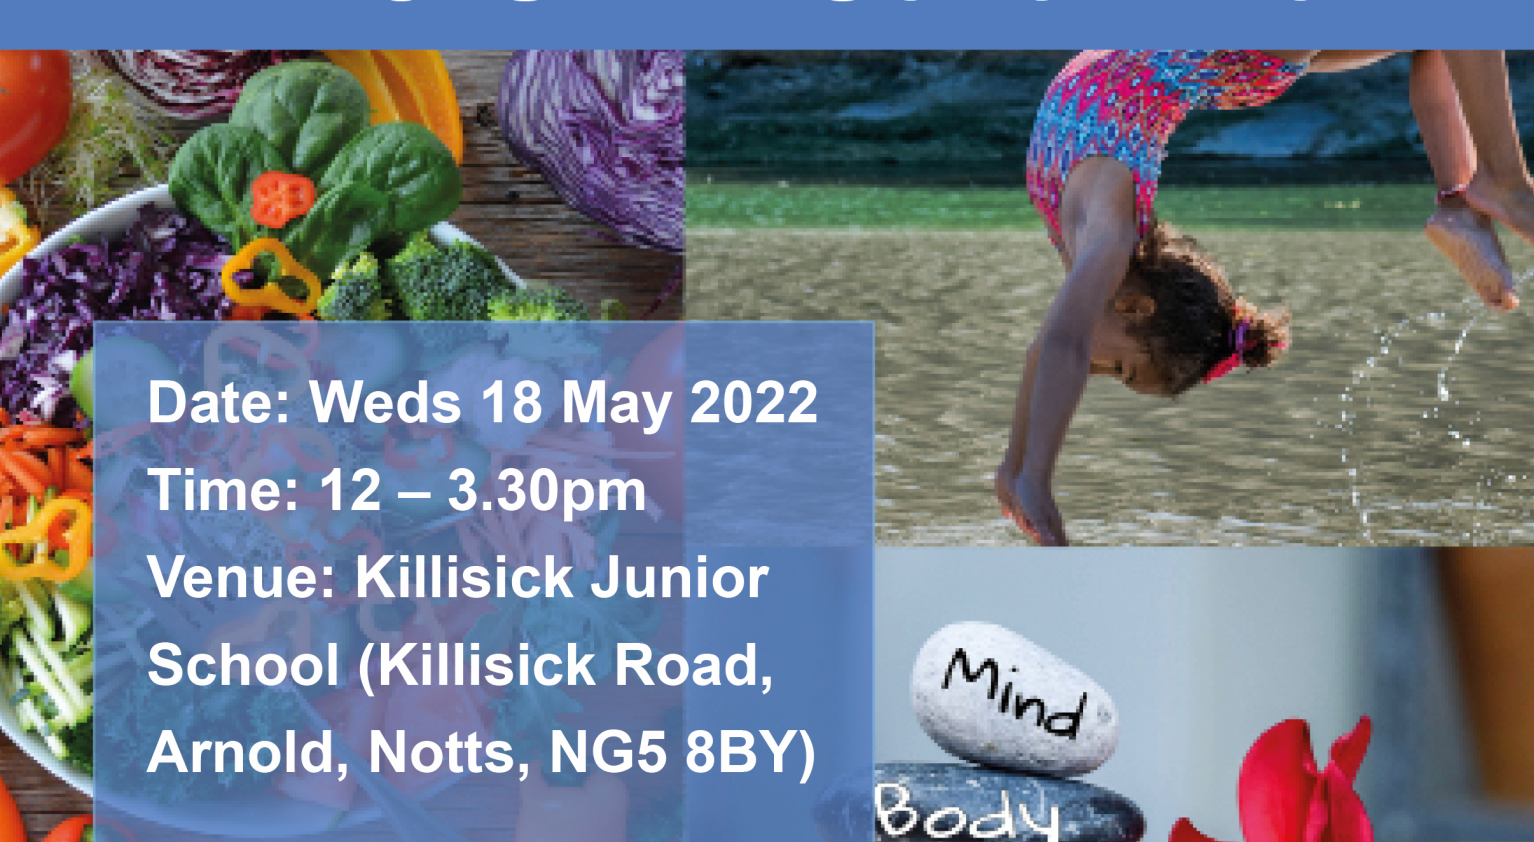 Date: Weds 18th May 2022. Time 12-3.30pm. Venue Killisick Junior School